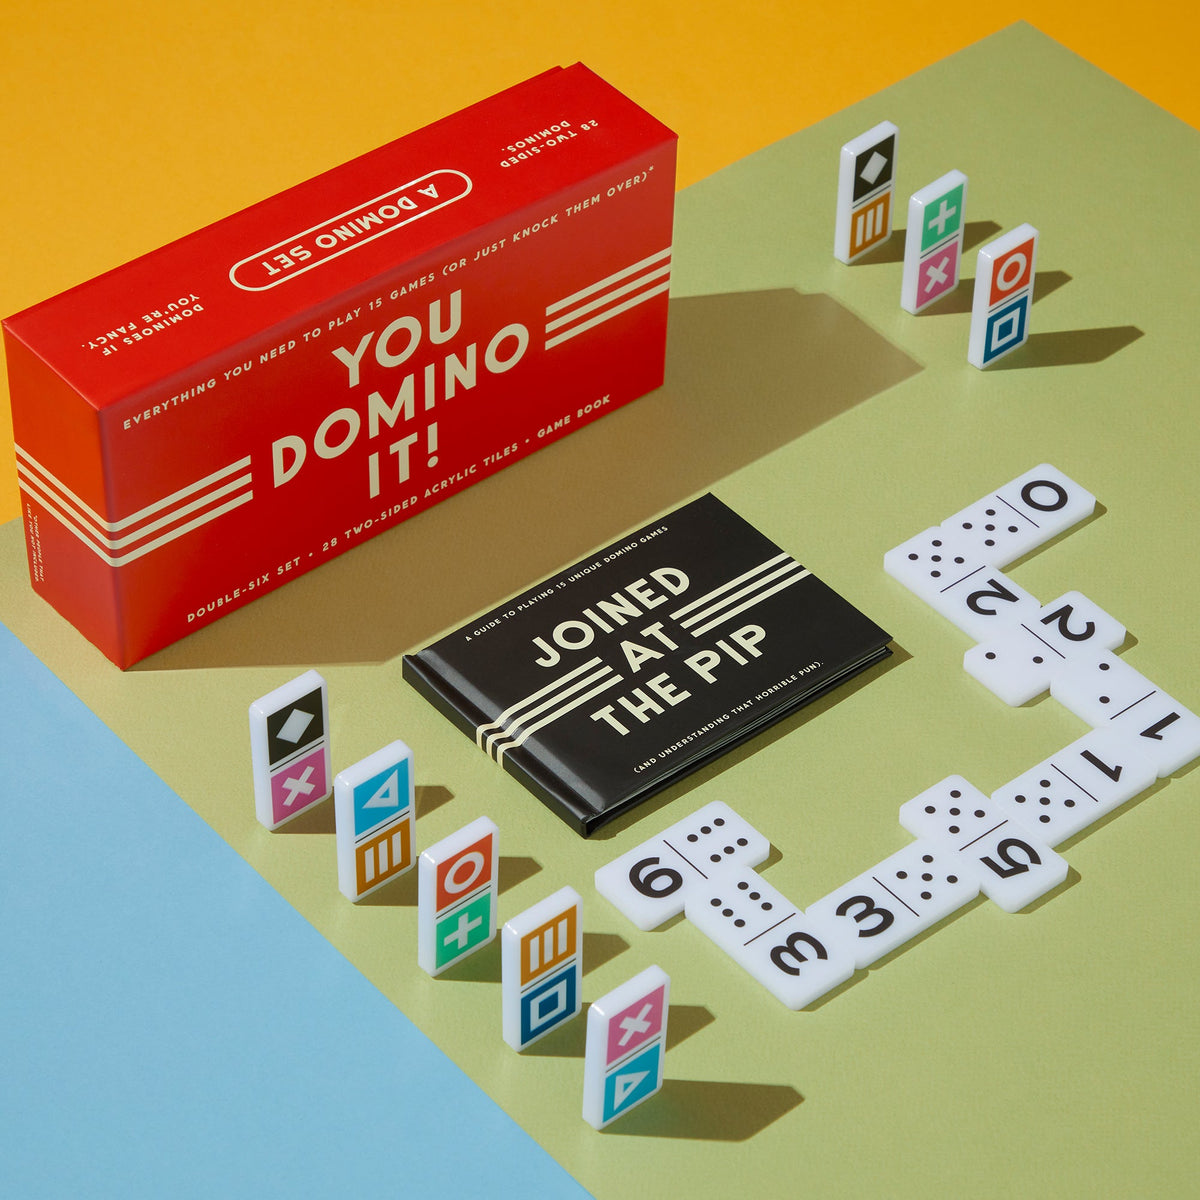 Double Six Club Pub Dot Dominoes Game Set 28 Double 6 Dominoes Set